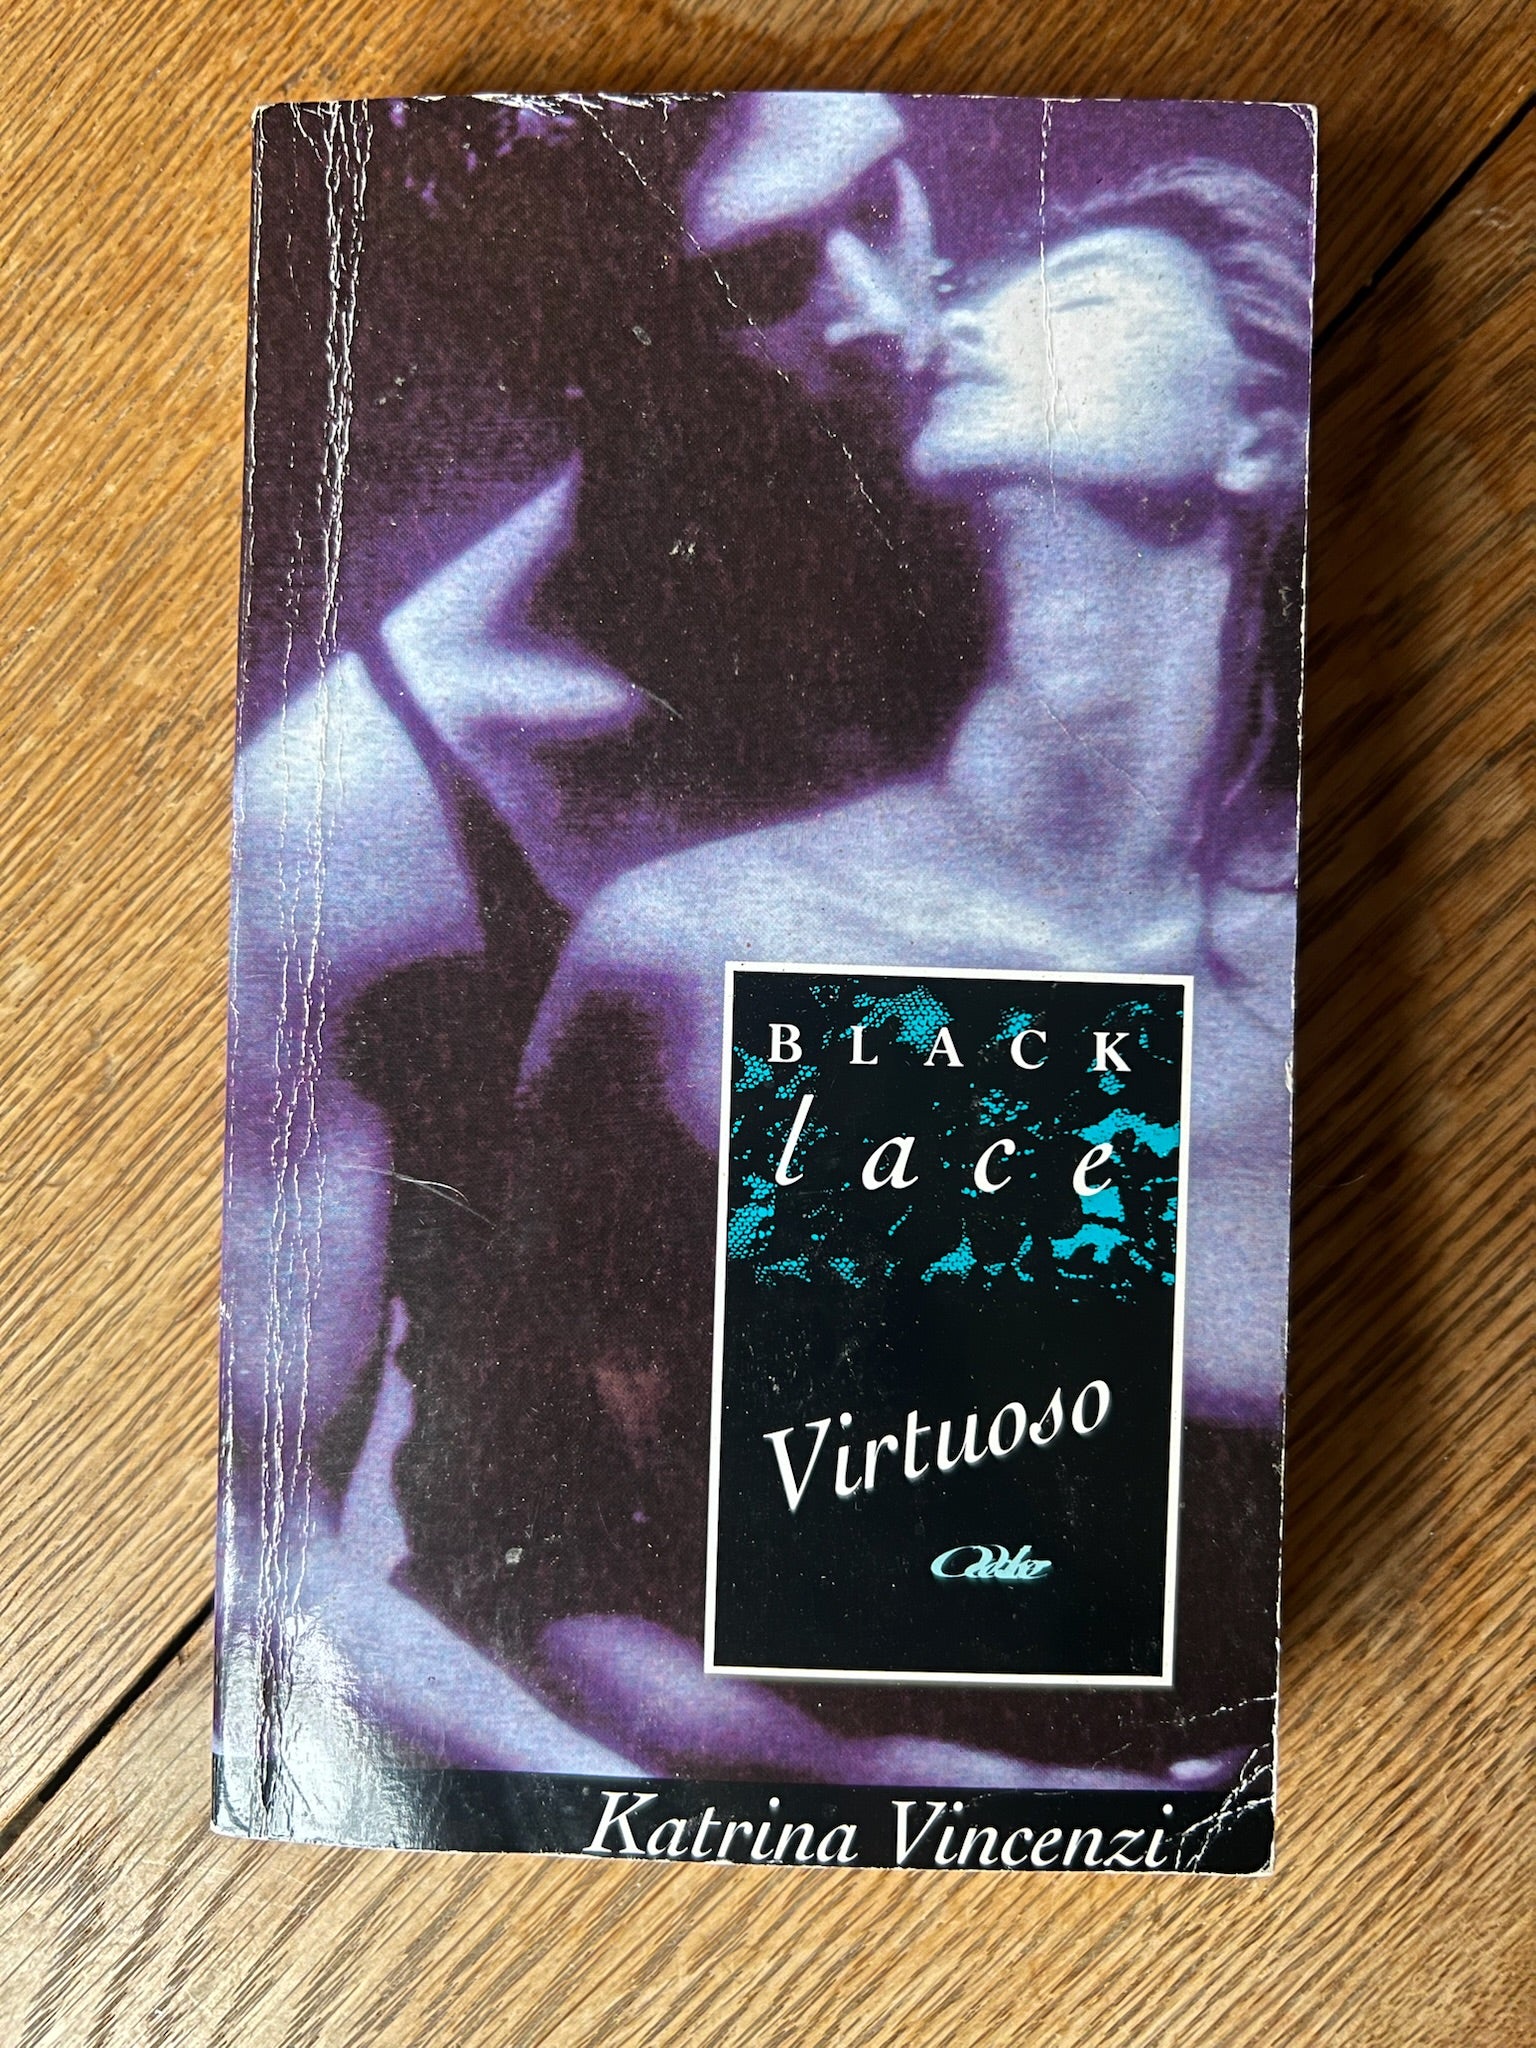 “BLACK LACE’ Virtuoso Katrina Vincenzo